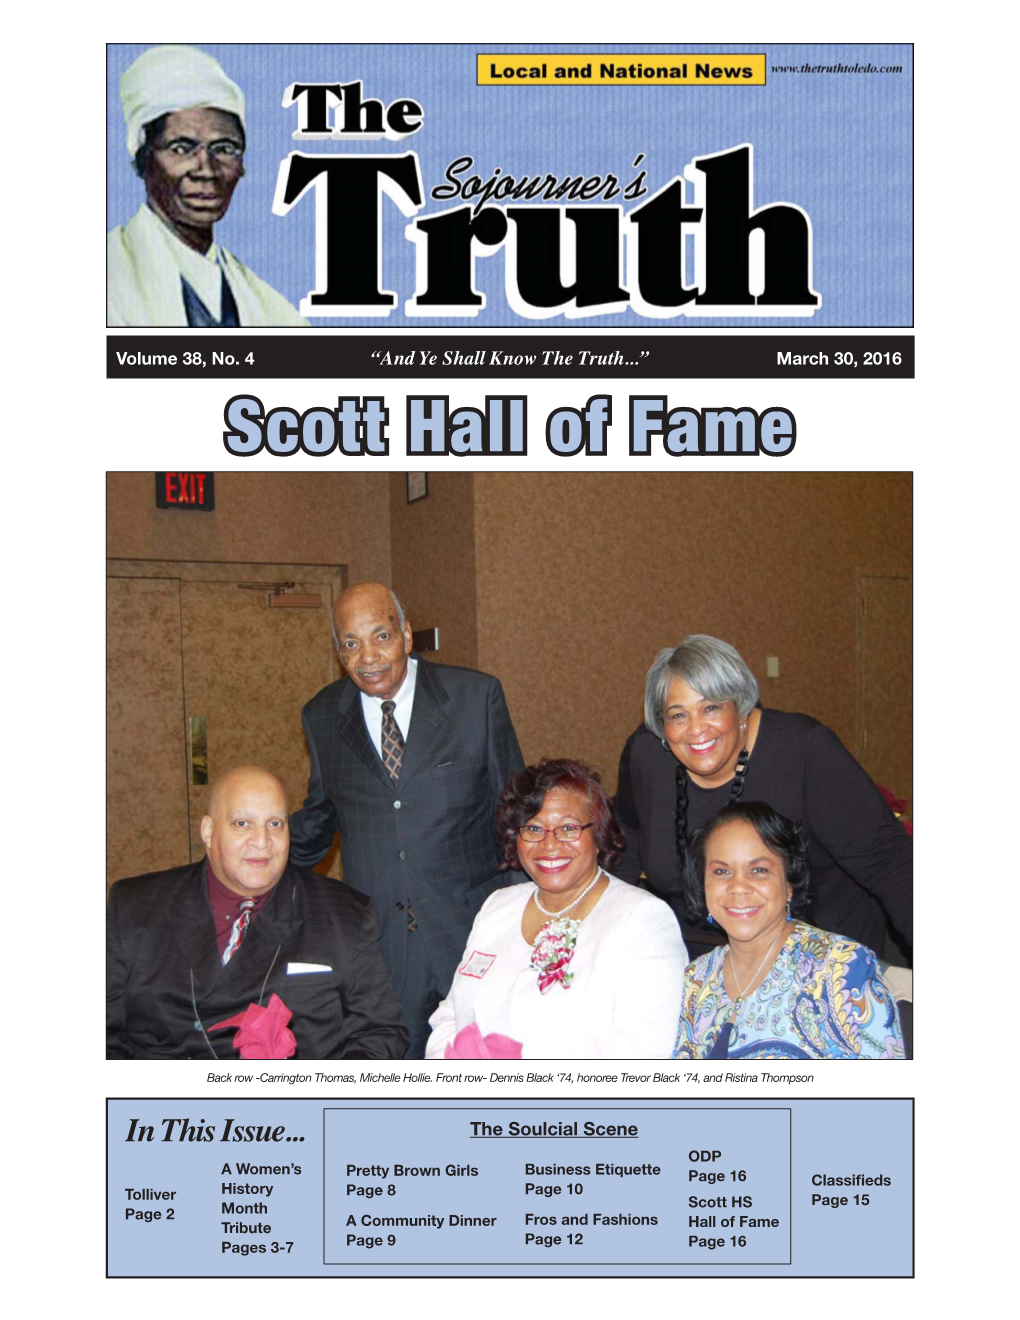 Scott Hall of Fame